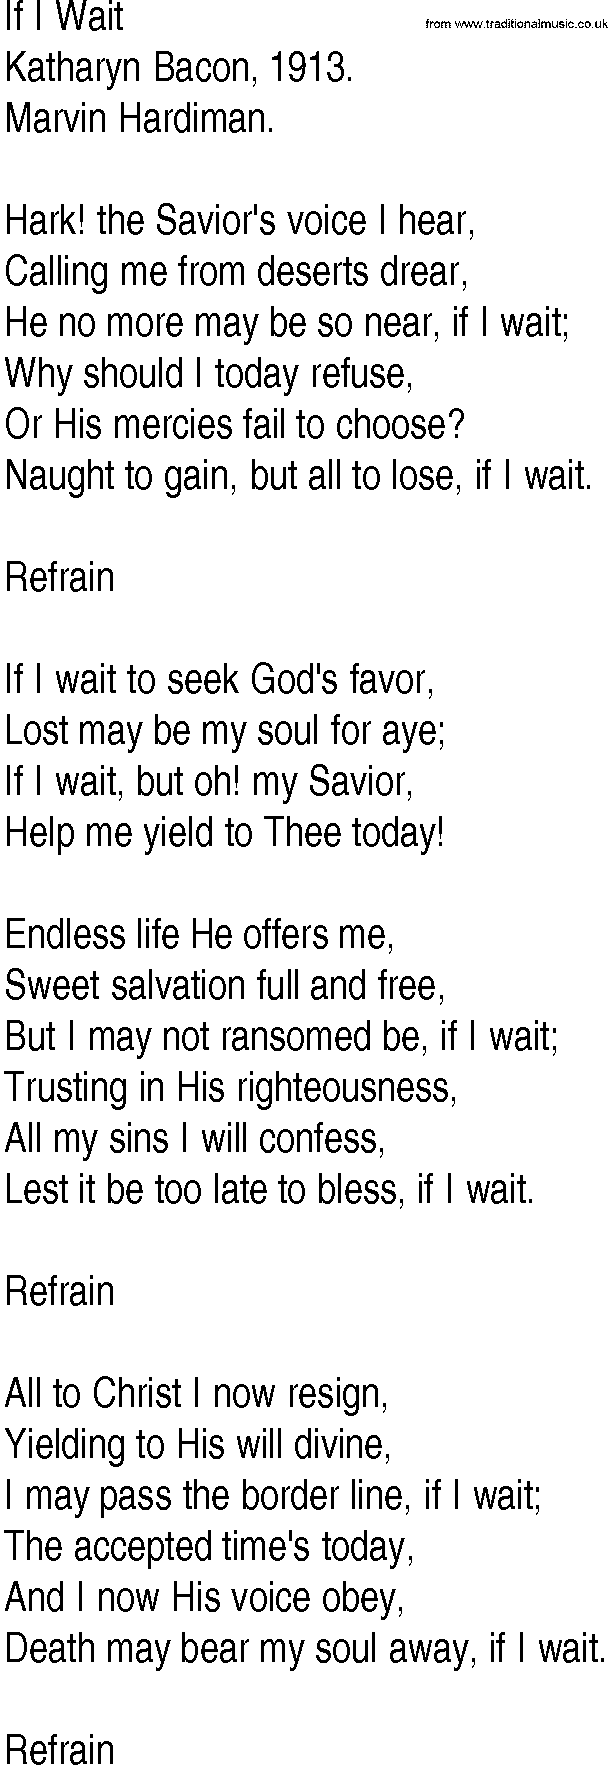 Hymn and Gospel Song: If I Wait by Katharyn Bacon lyrics